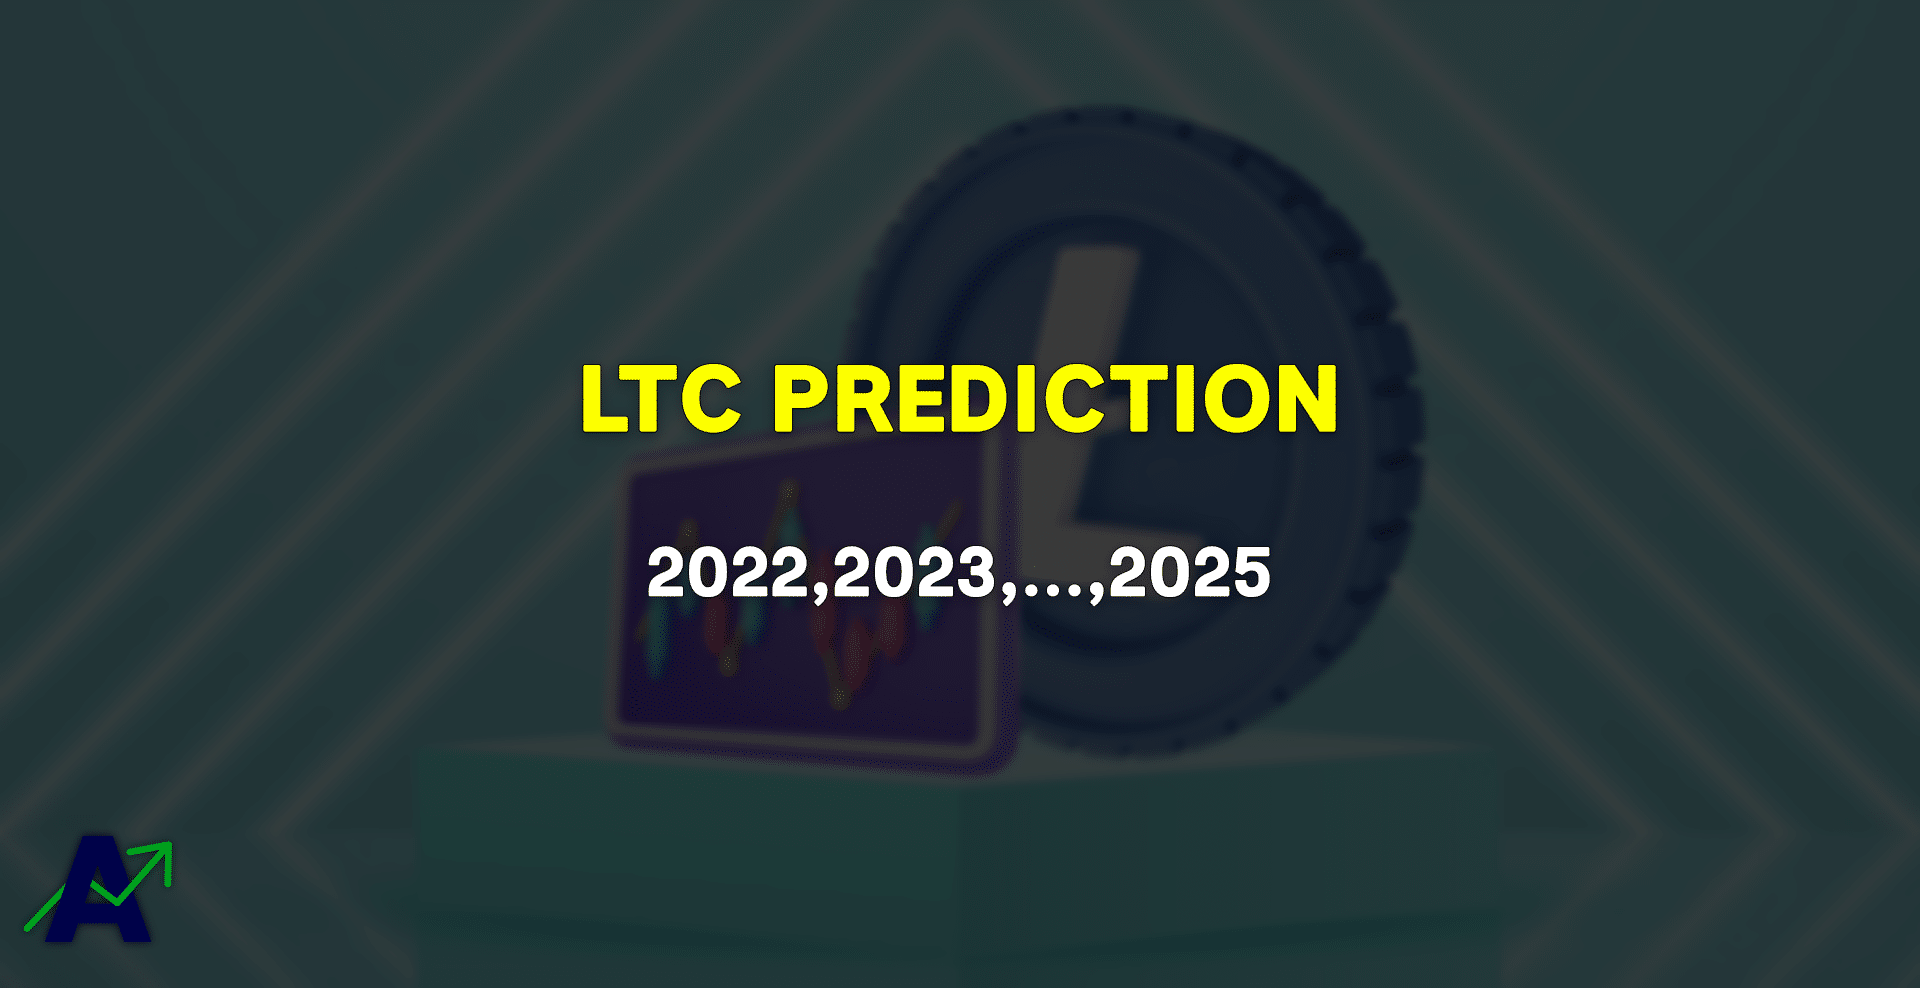 Litecoin price prediction for 2022, 2023, 2024 & 2025